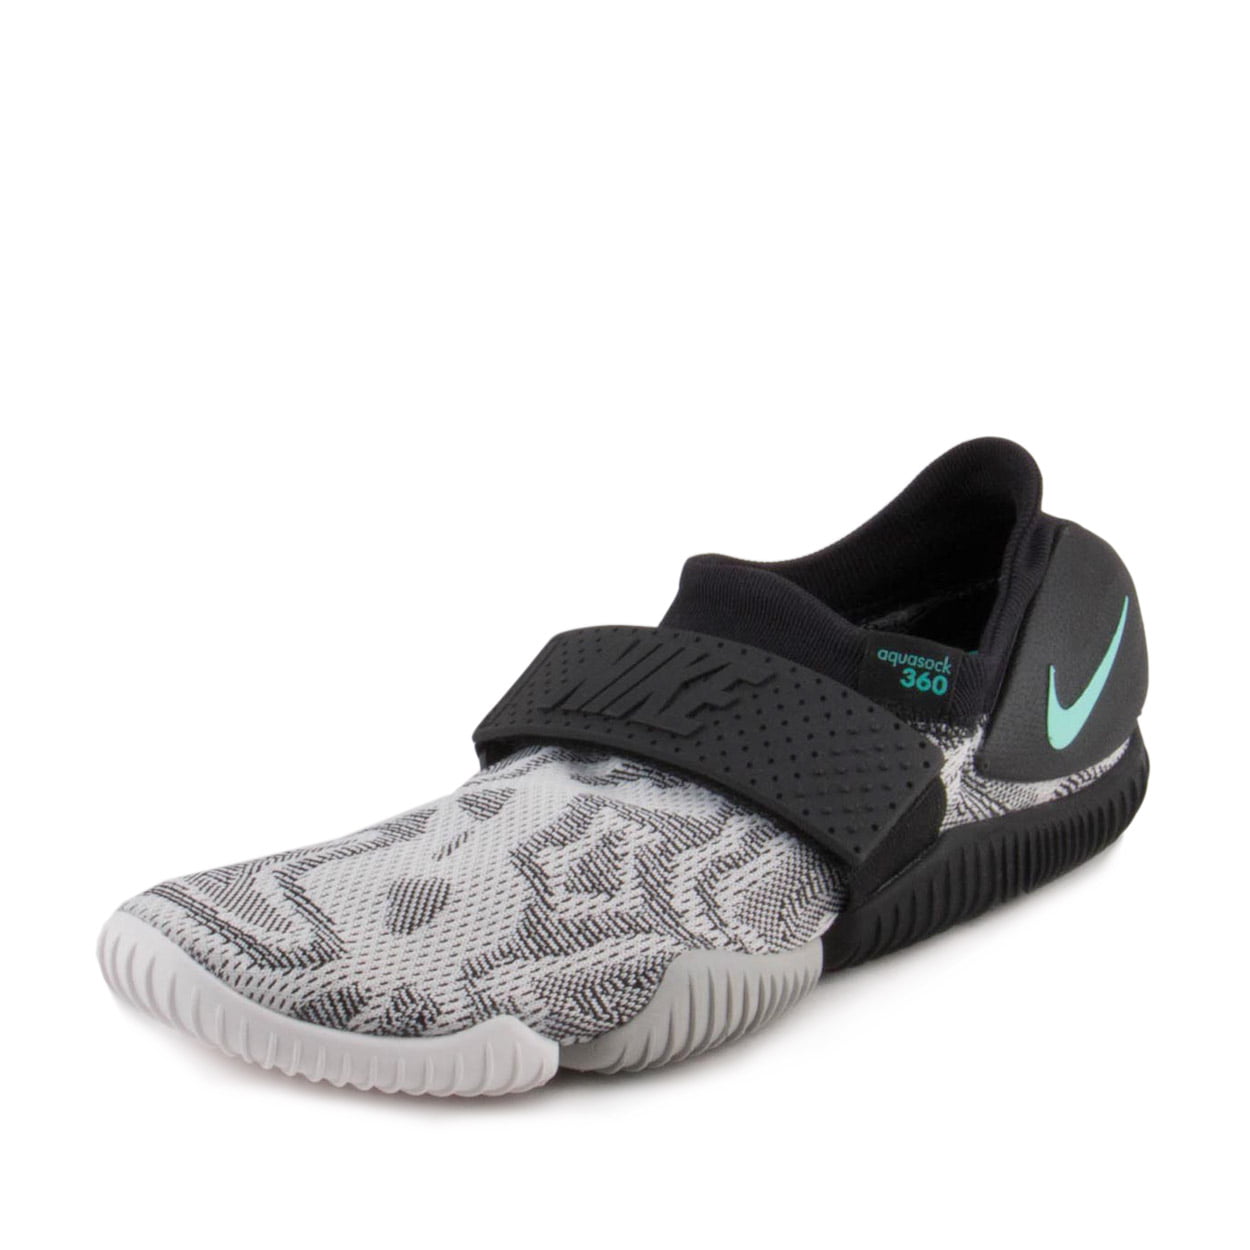 Nike Mens Aqua Sock 360 QS Black/Turbo 